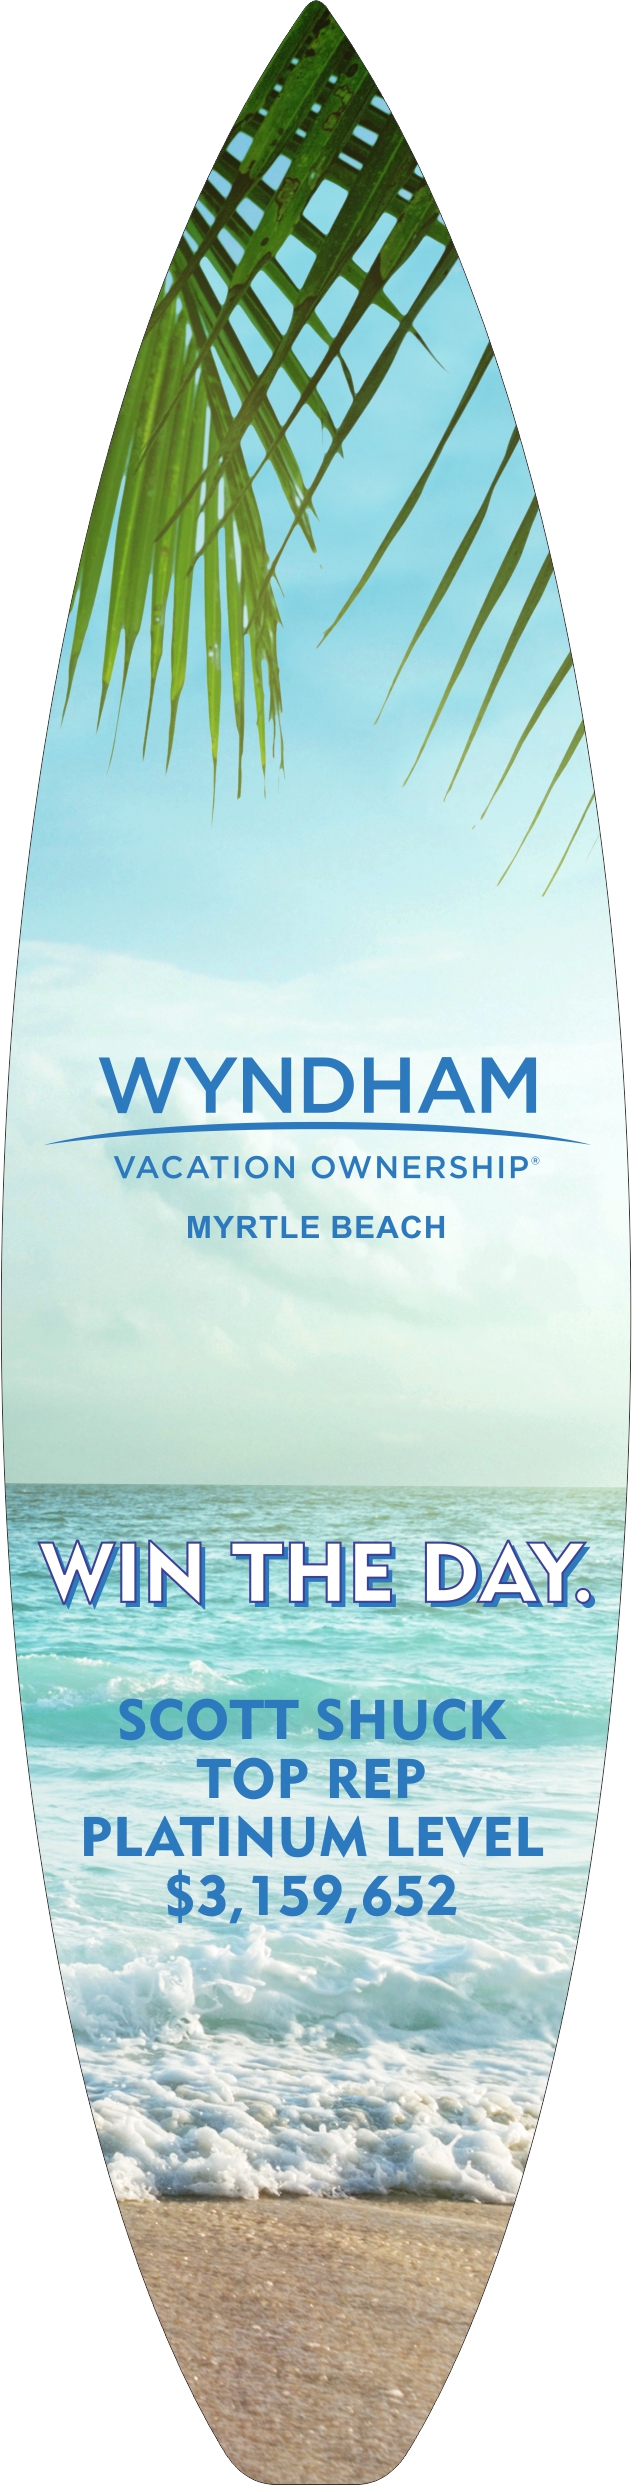 Wyndham Surf Awards.jpg